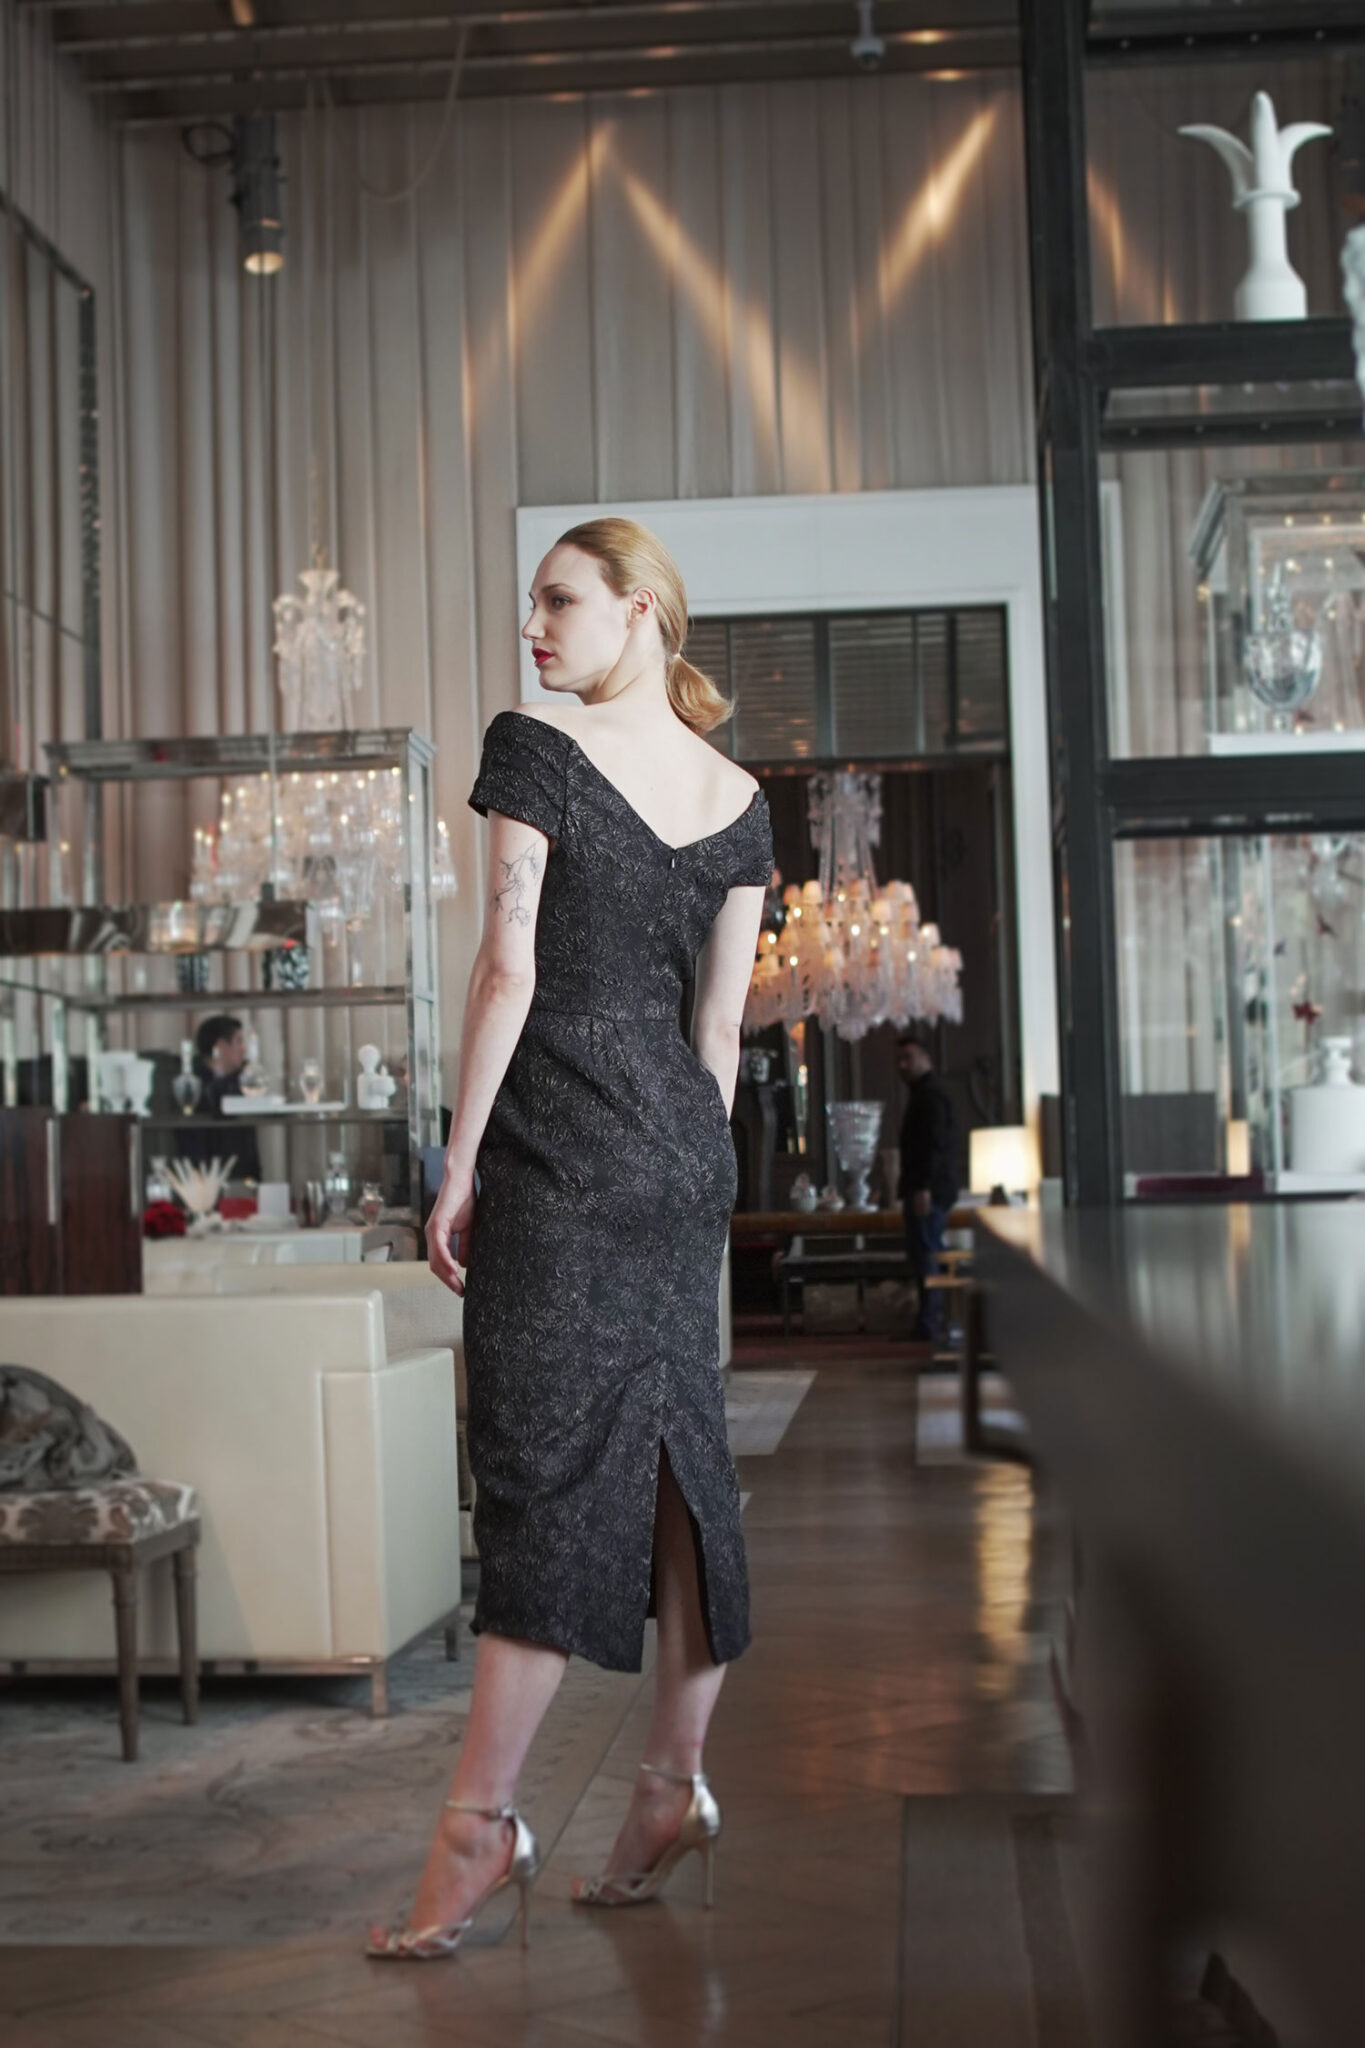 Fairytale Look 4 - Elegant dress with open back neckline in black - Verdin New York